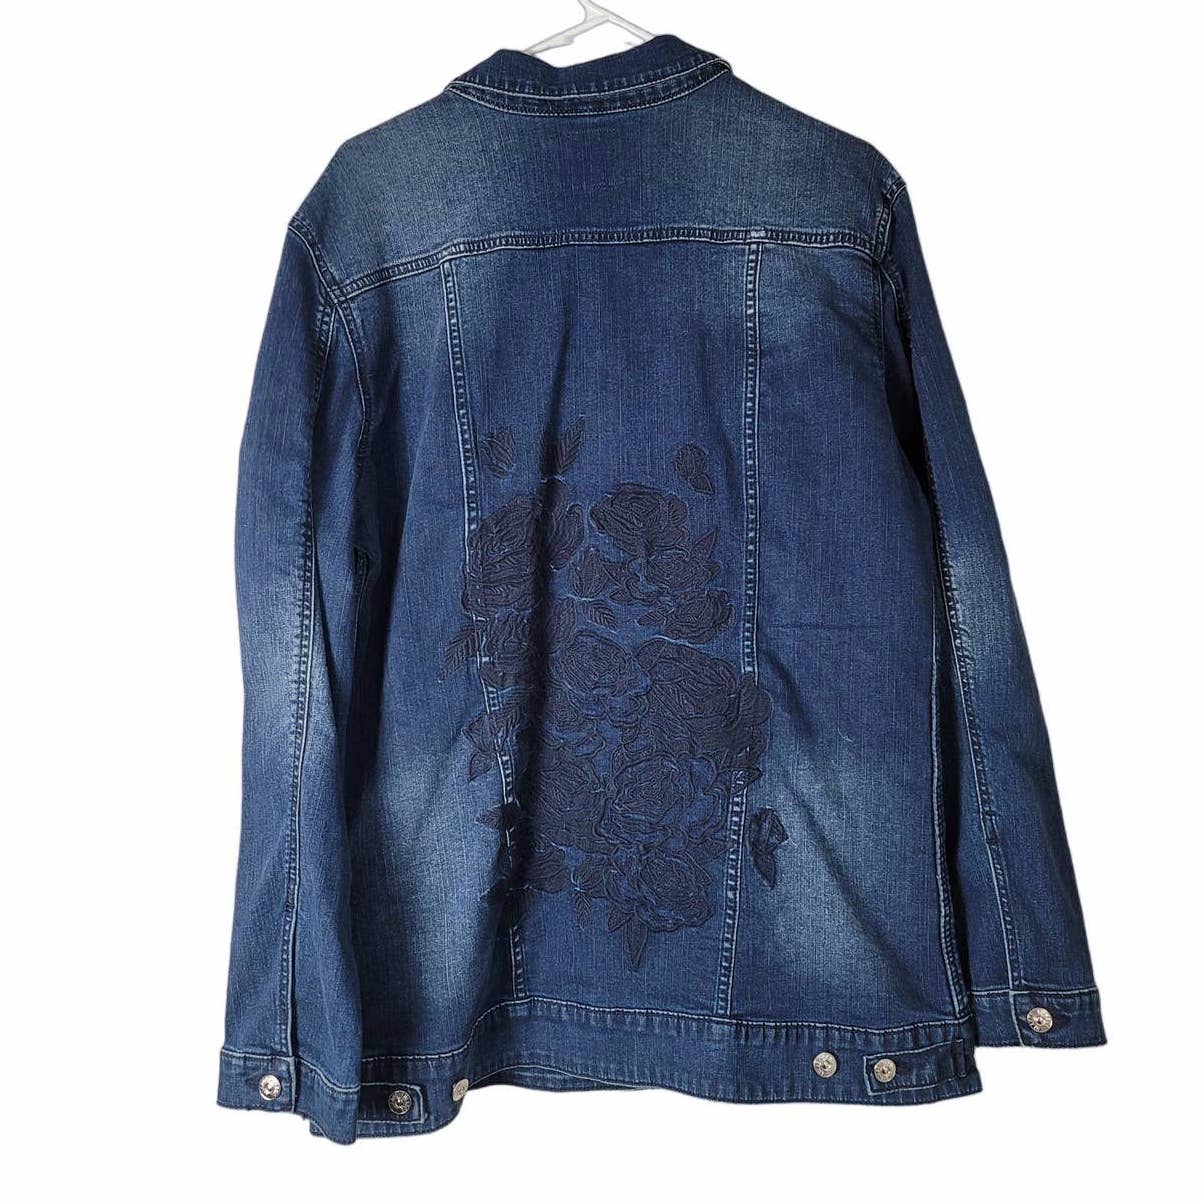 LuLaRoe Jaxon Denim Jean Jacket Dark Wash Floral Embroidered Size XL